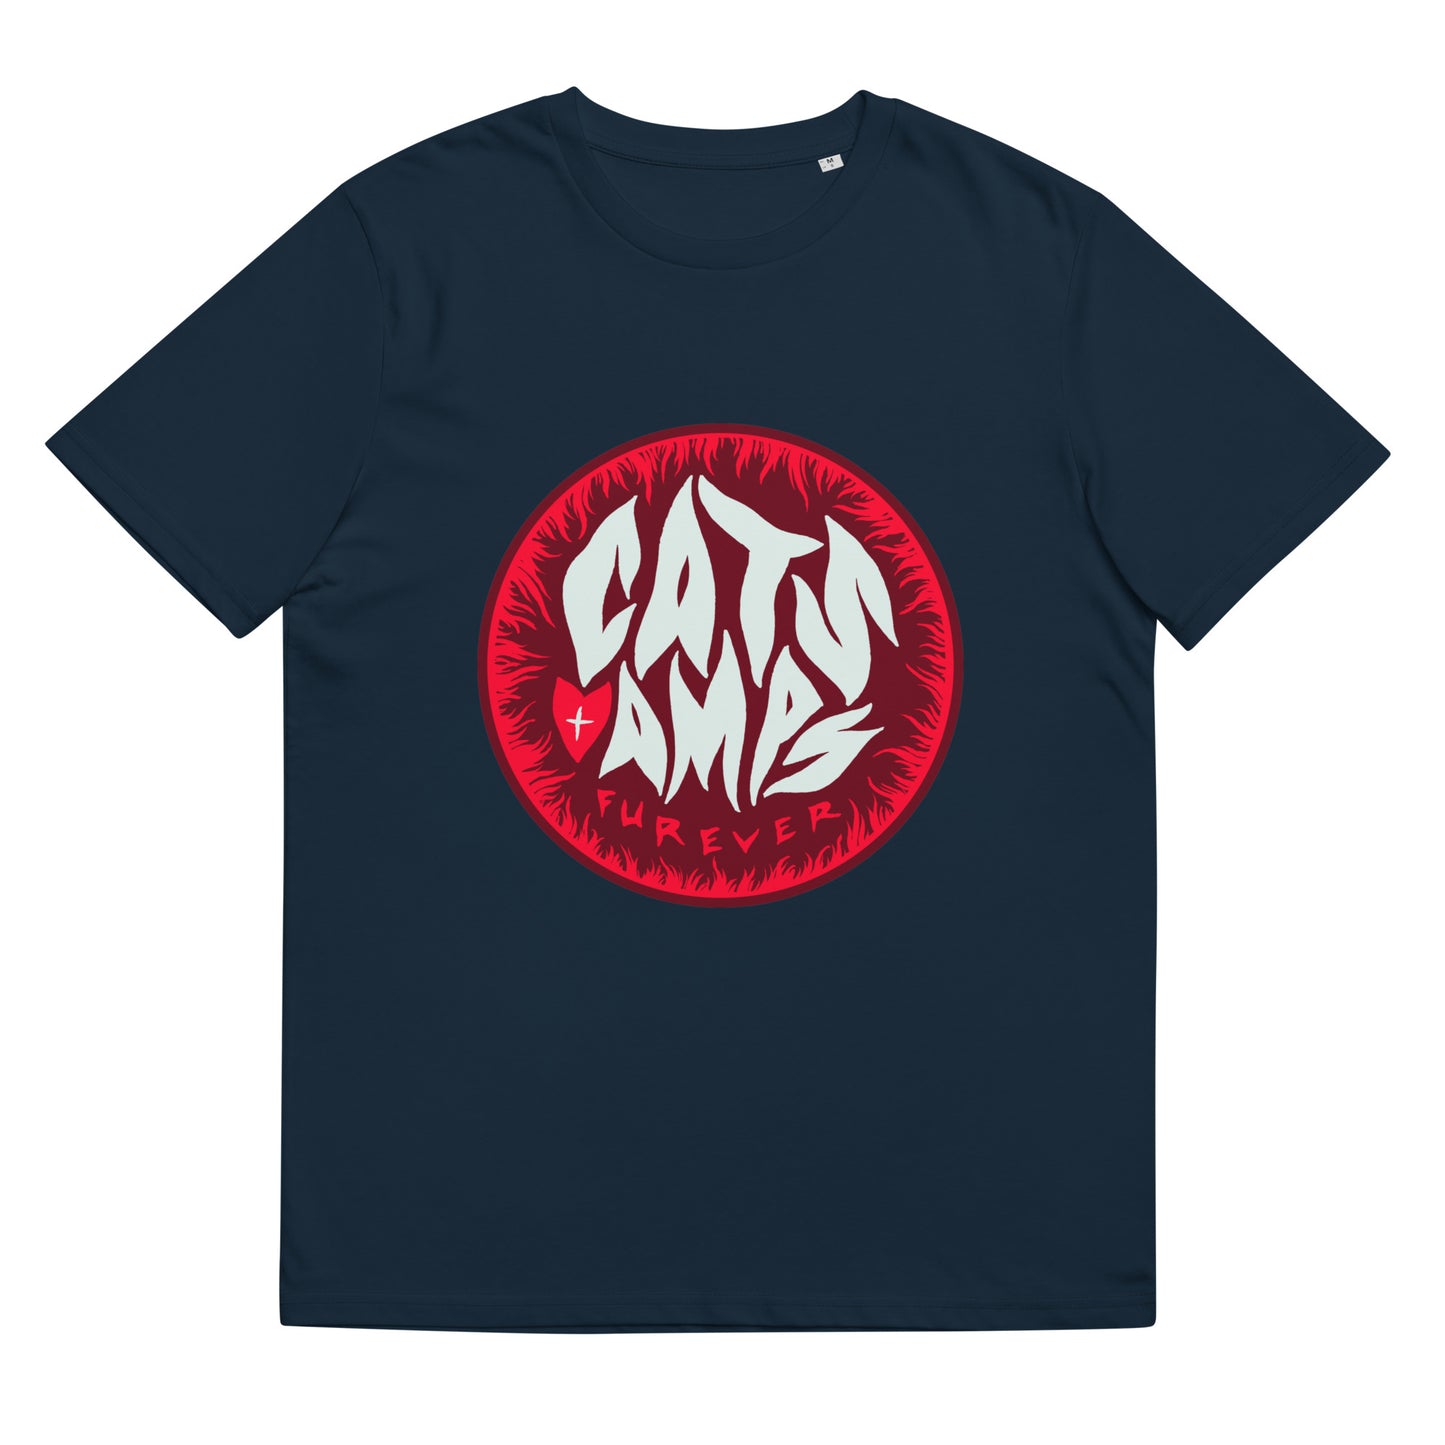 CATS ON AMPS - Valentine Furever - Unisex Organic Cotton T-Shirt